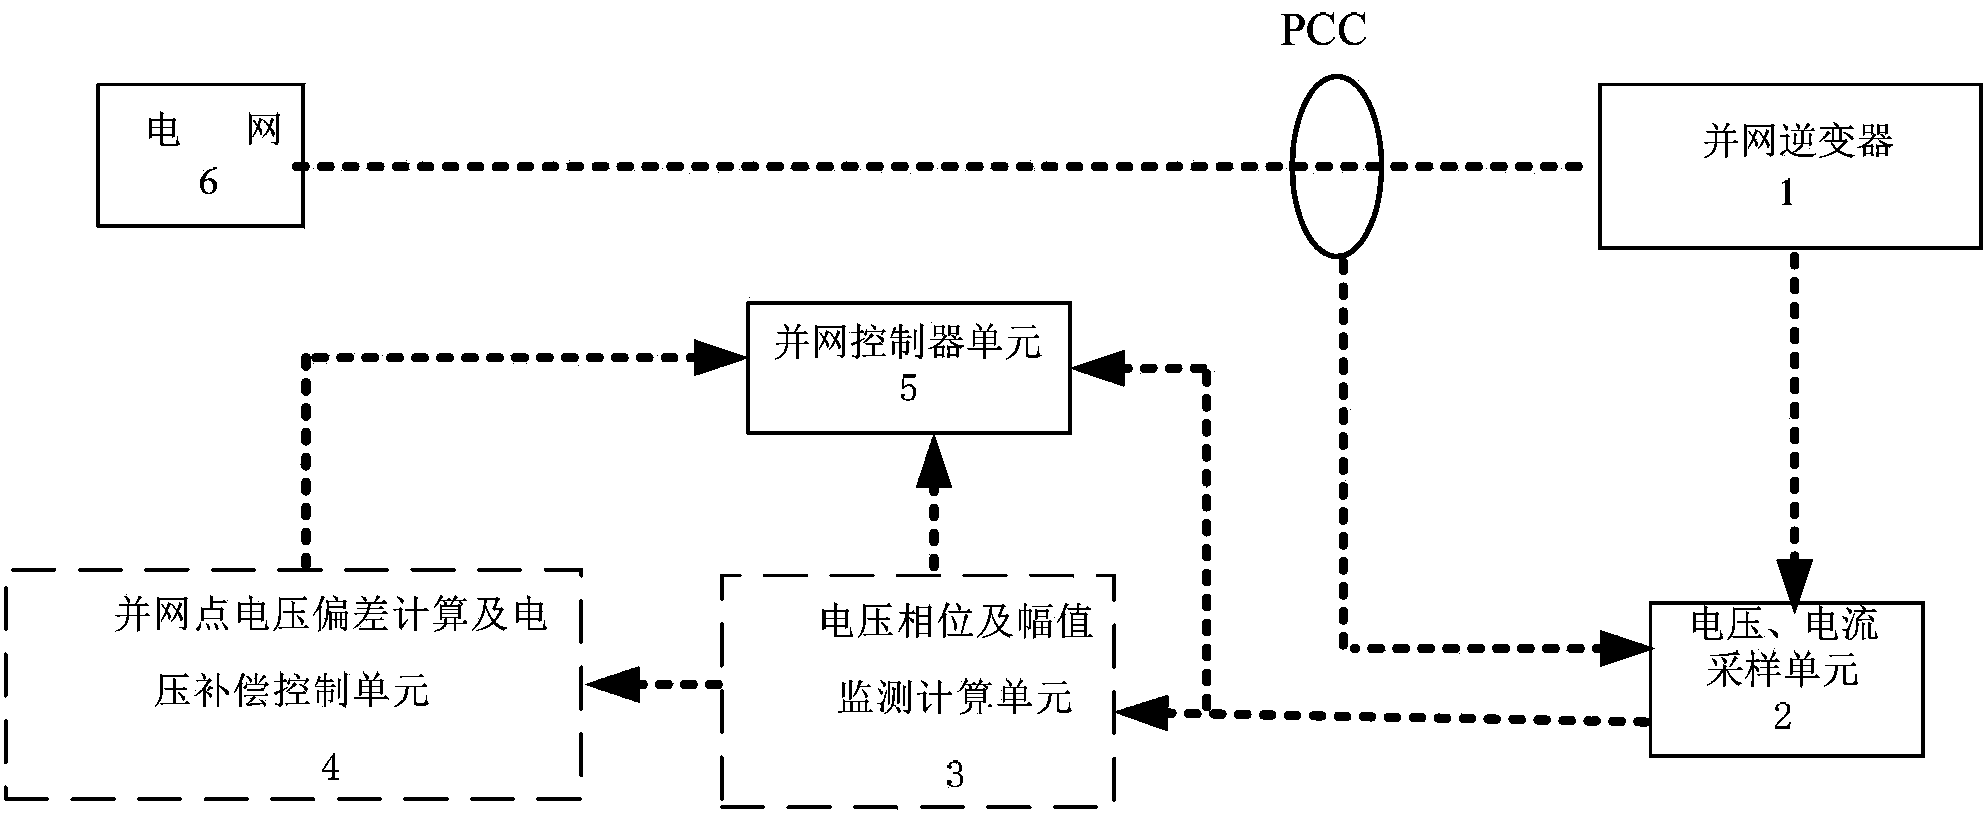 Grid-connected inverter grid-connection point voltage dynamic compensation control method